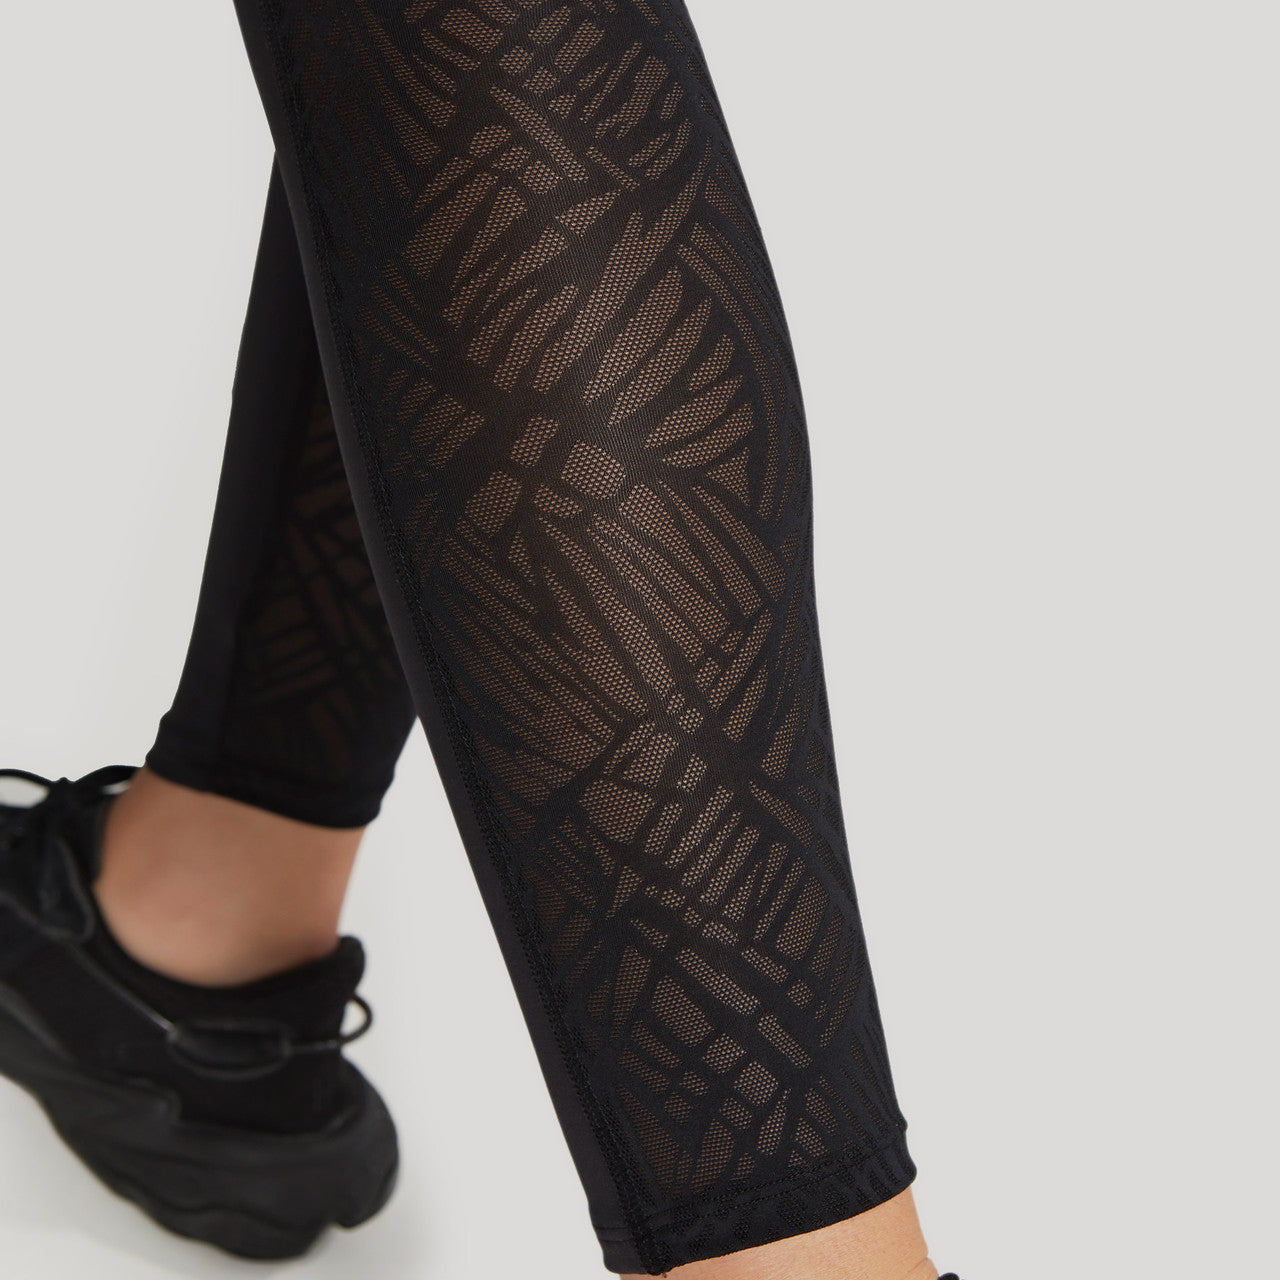 Ultra Adapt Sports Legging - Black worn by model close up back leg view